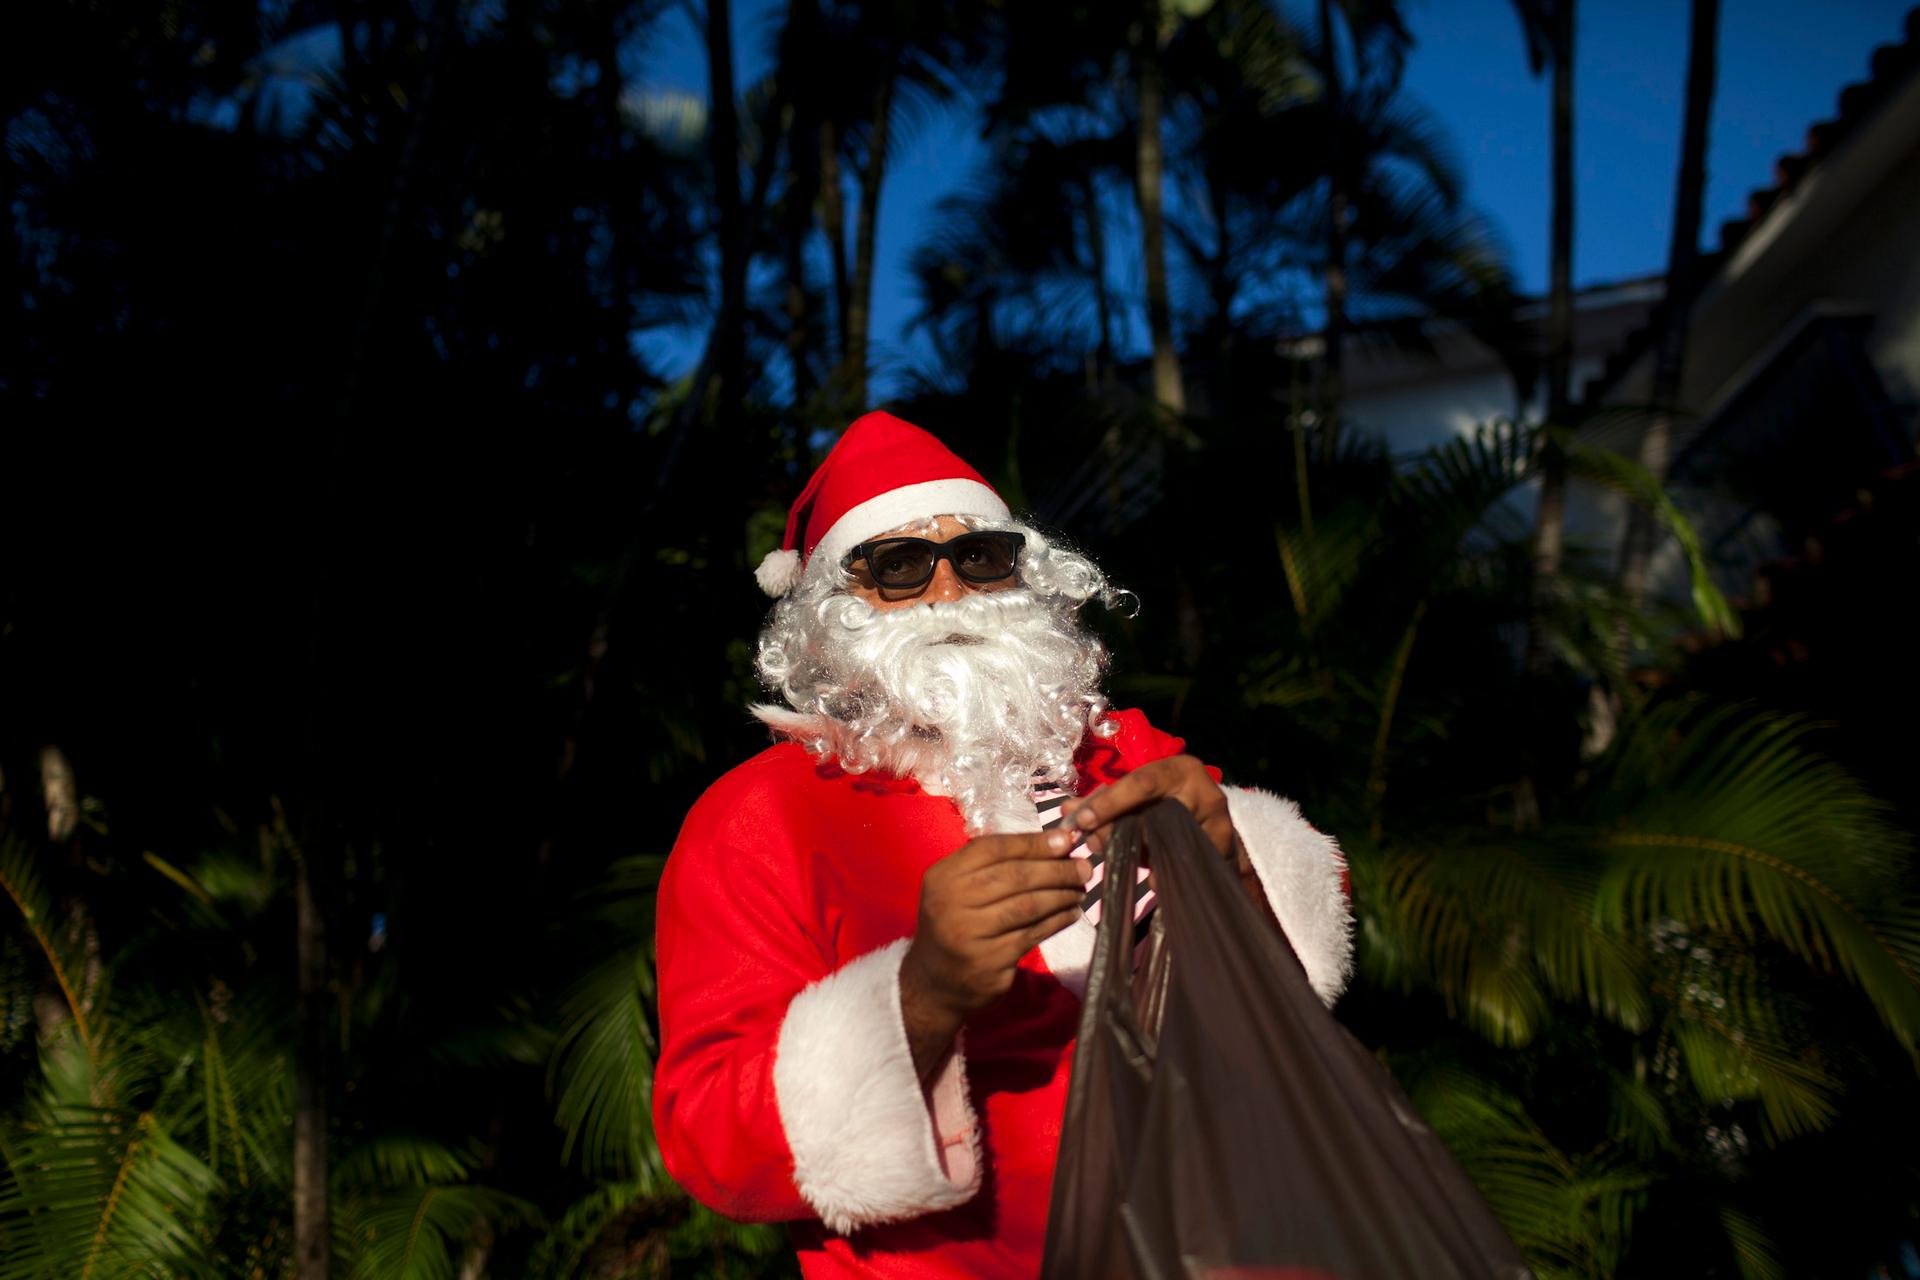 Vladimir Ramirez, a former inmate dressed as Santa Claus, prepares to take part in the toy-distribution event "Santa va a la Carcel" (Santa Goes To Jail) in Caracas, Venezuela, December 19, 2010.